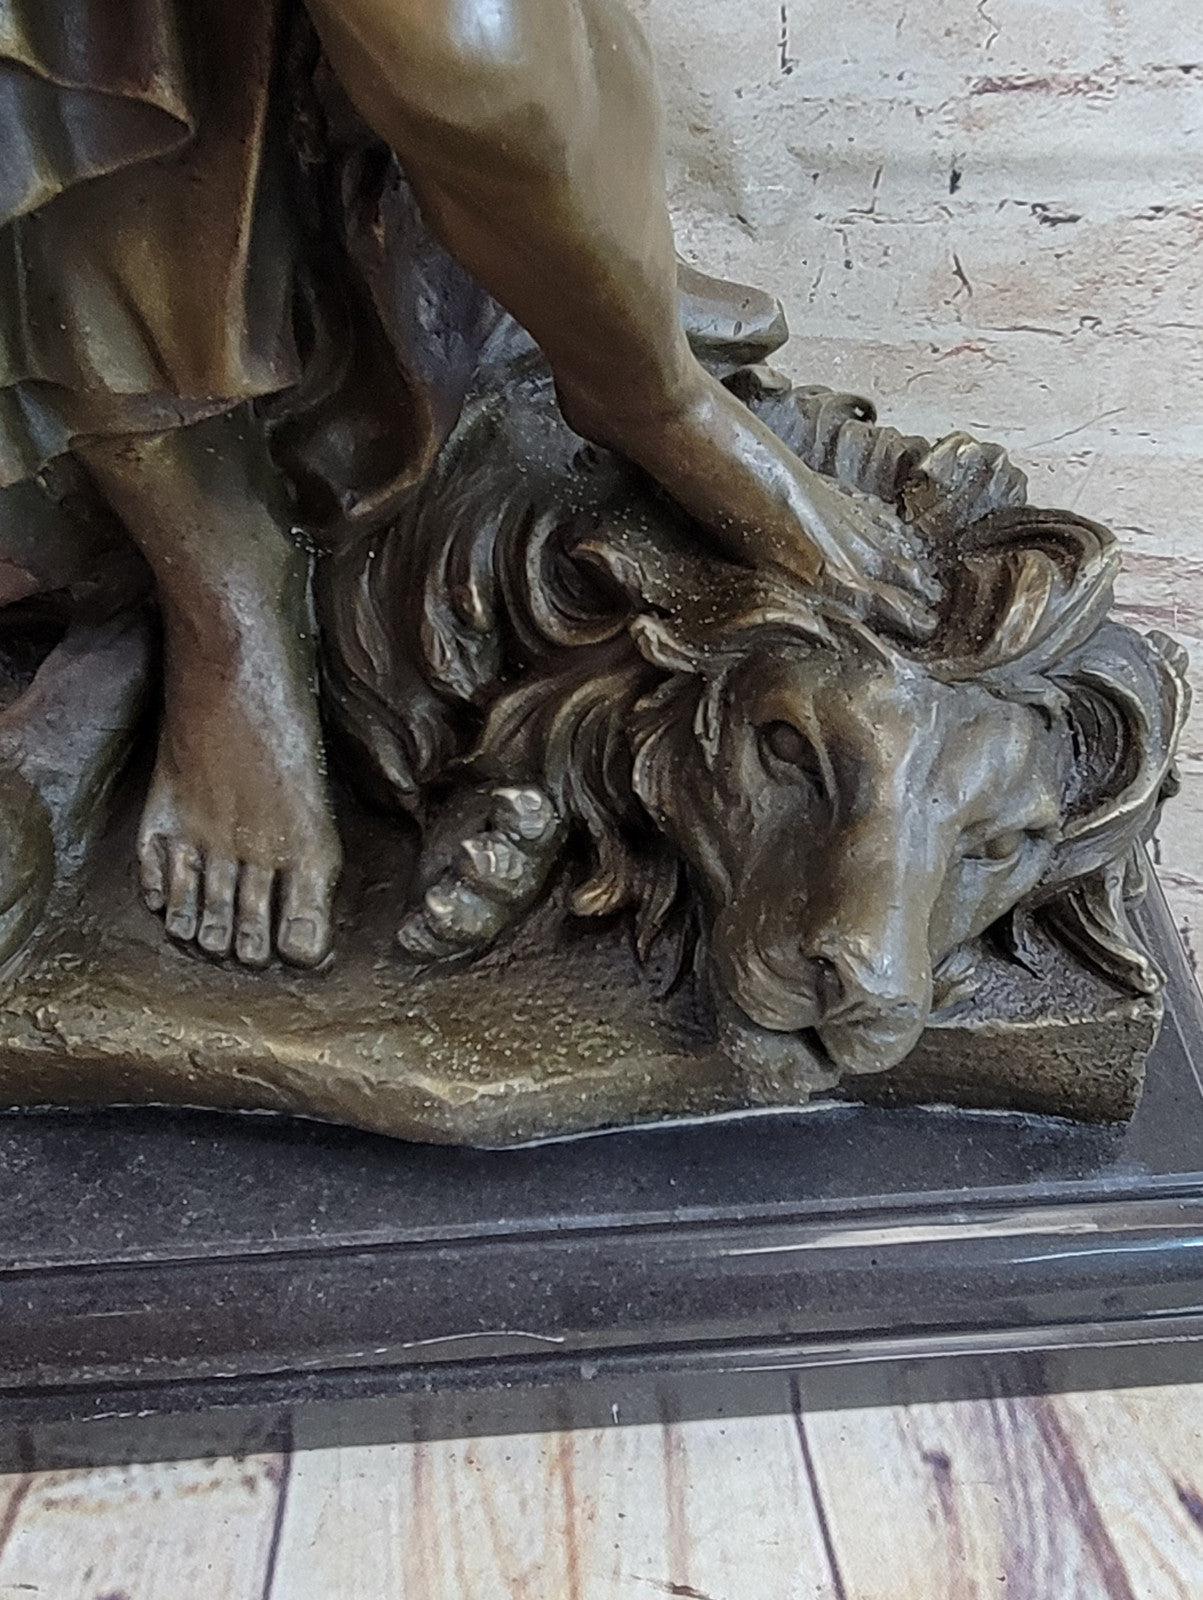 Handcrafted bronze sculpture SALE Crucifix Jesus Lion With Judas Valli Signed